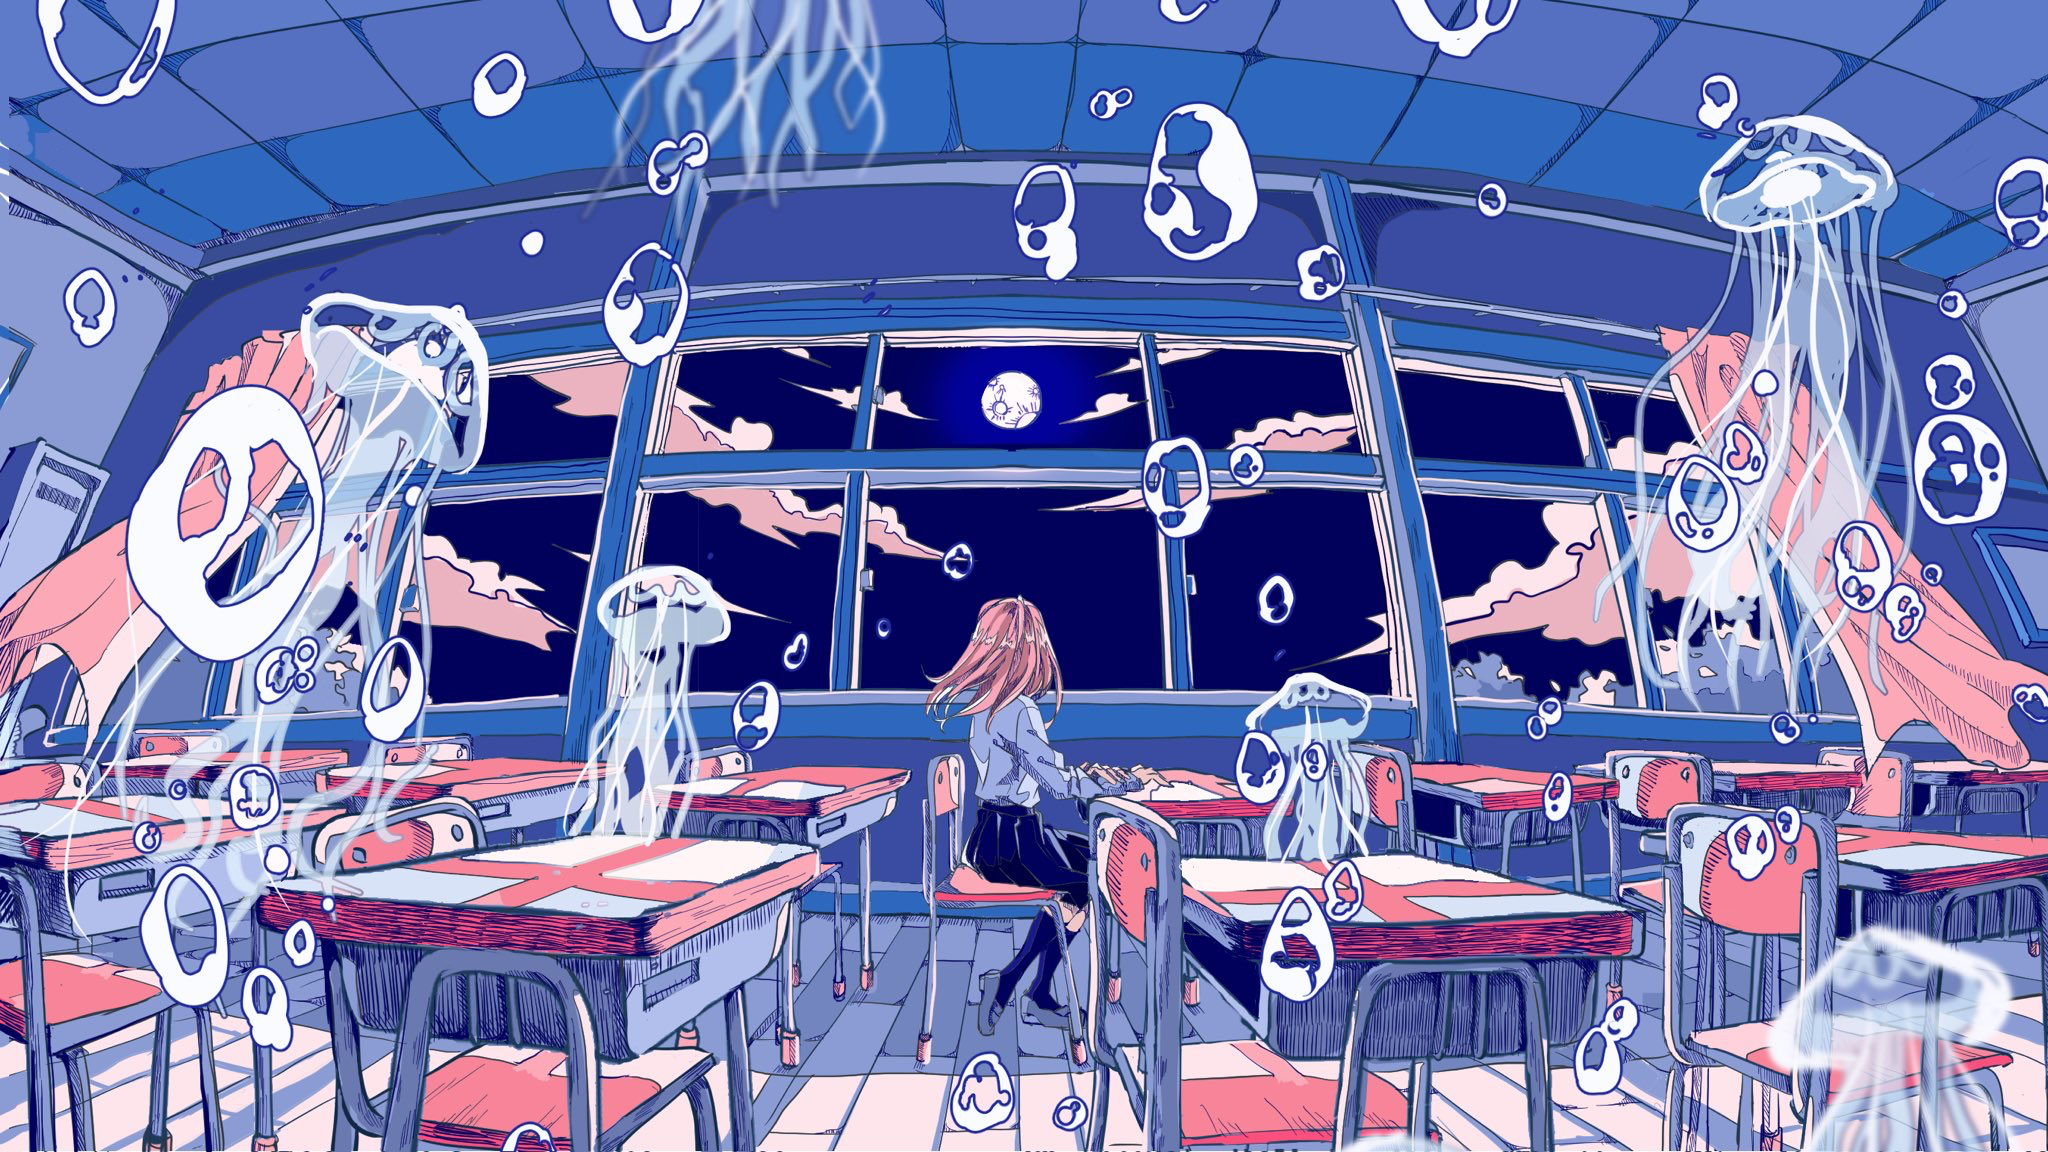 Anime 2048x1152 Pixiv anime bubbles classroom jellyfish schoolgirl anime girls school uniform desk chair sitting window sky clouds animals